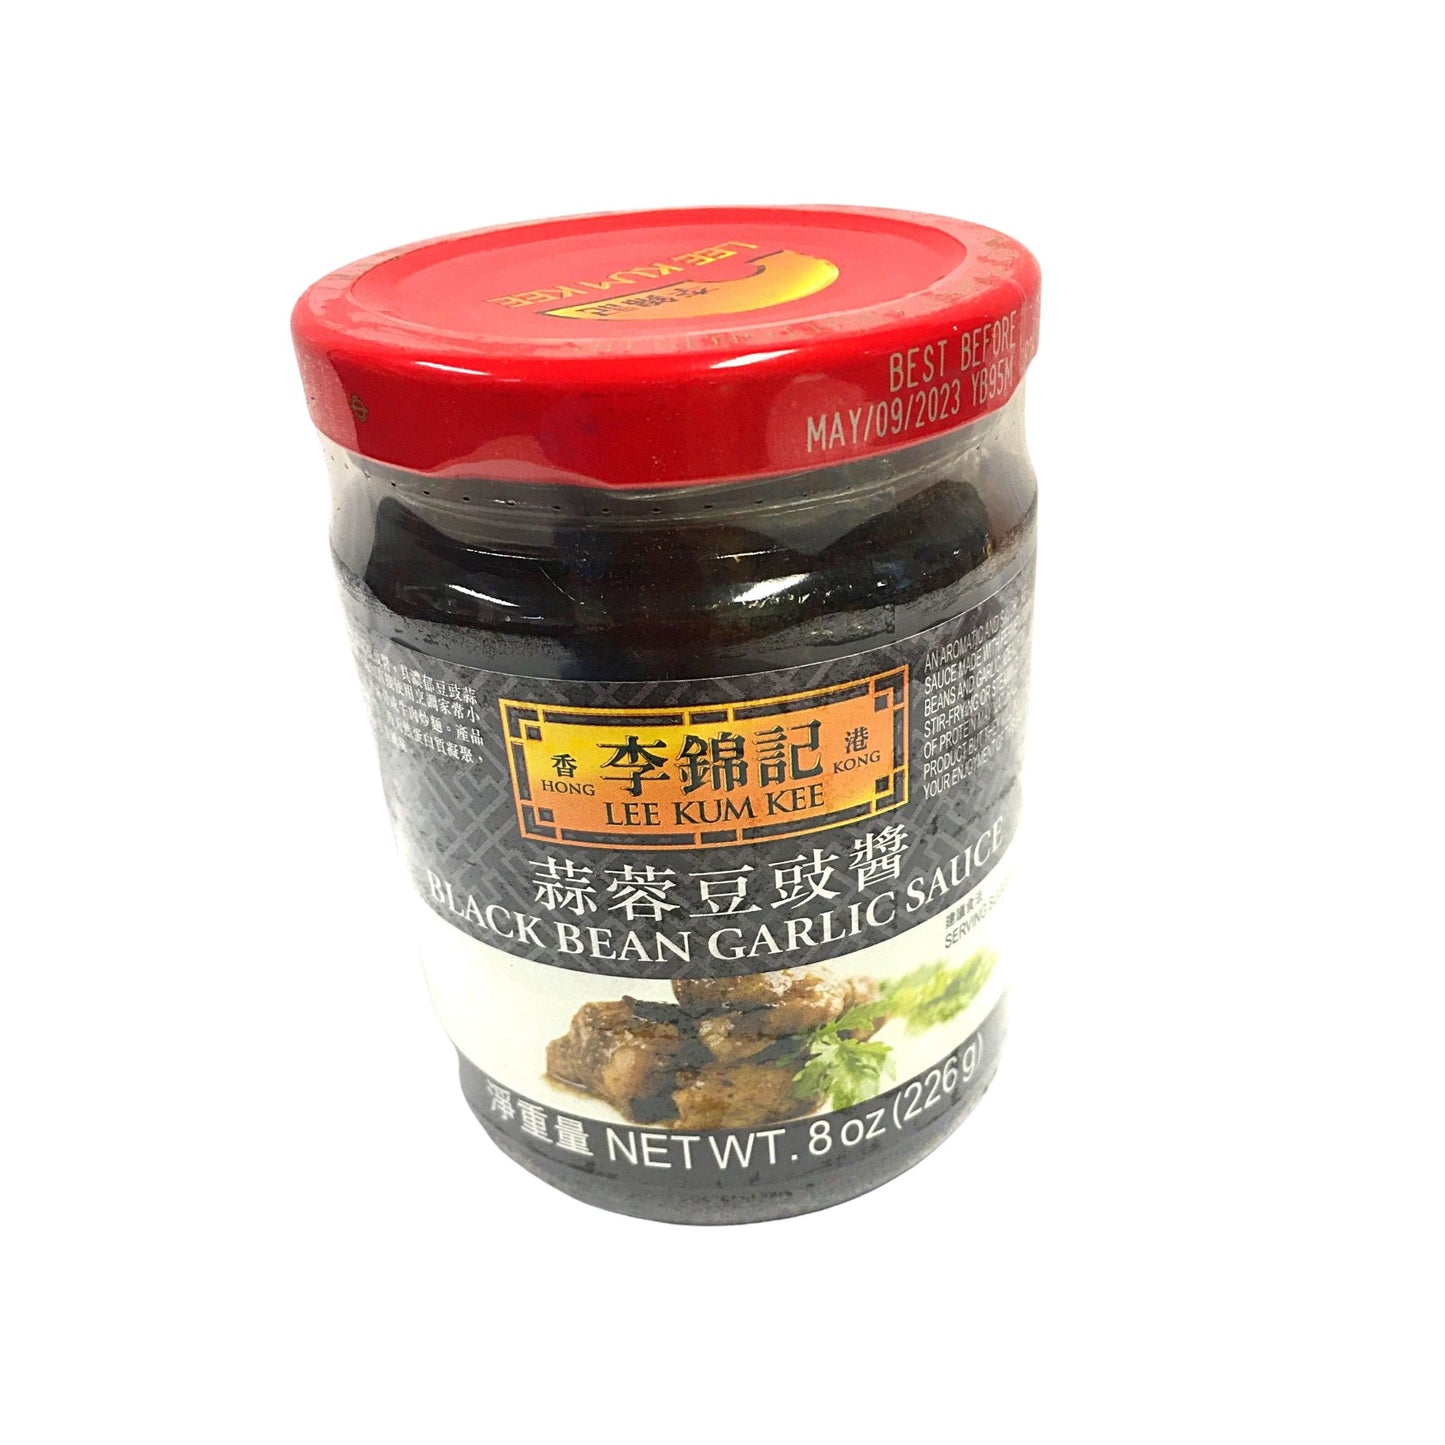 LKK Black Bean Garlic Sauce 蒜蓉豆鼓酱 (8 OZ)